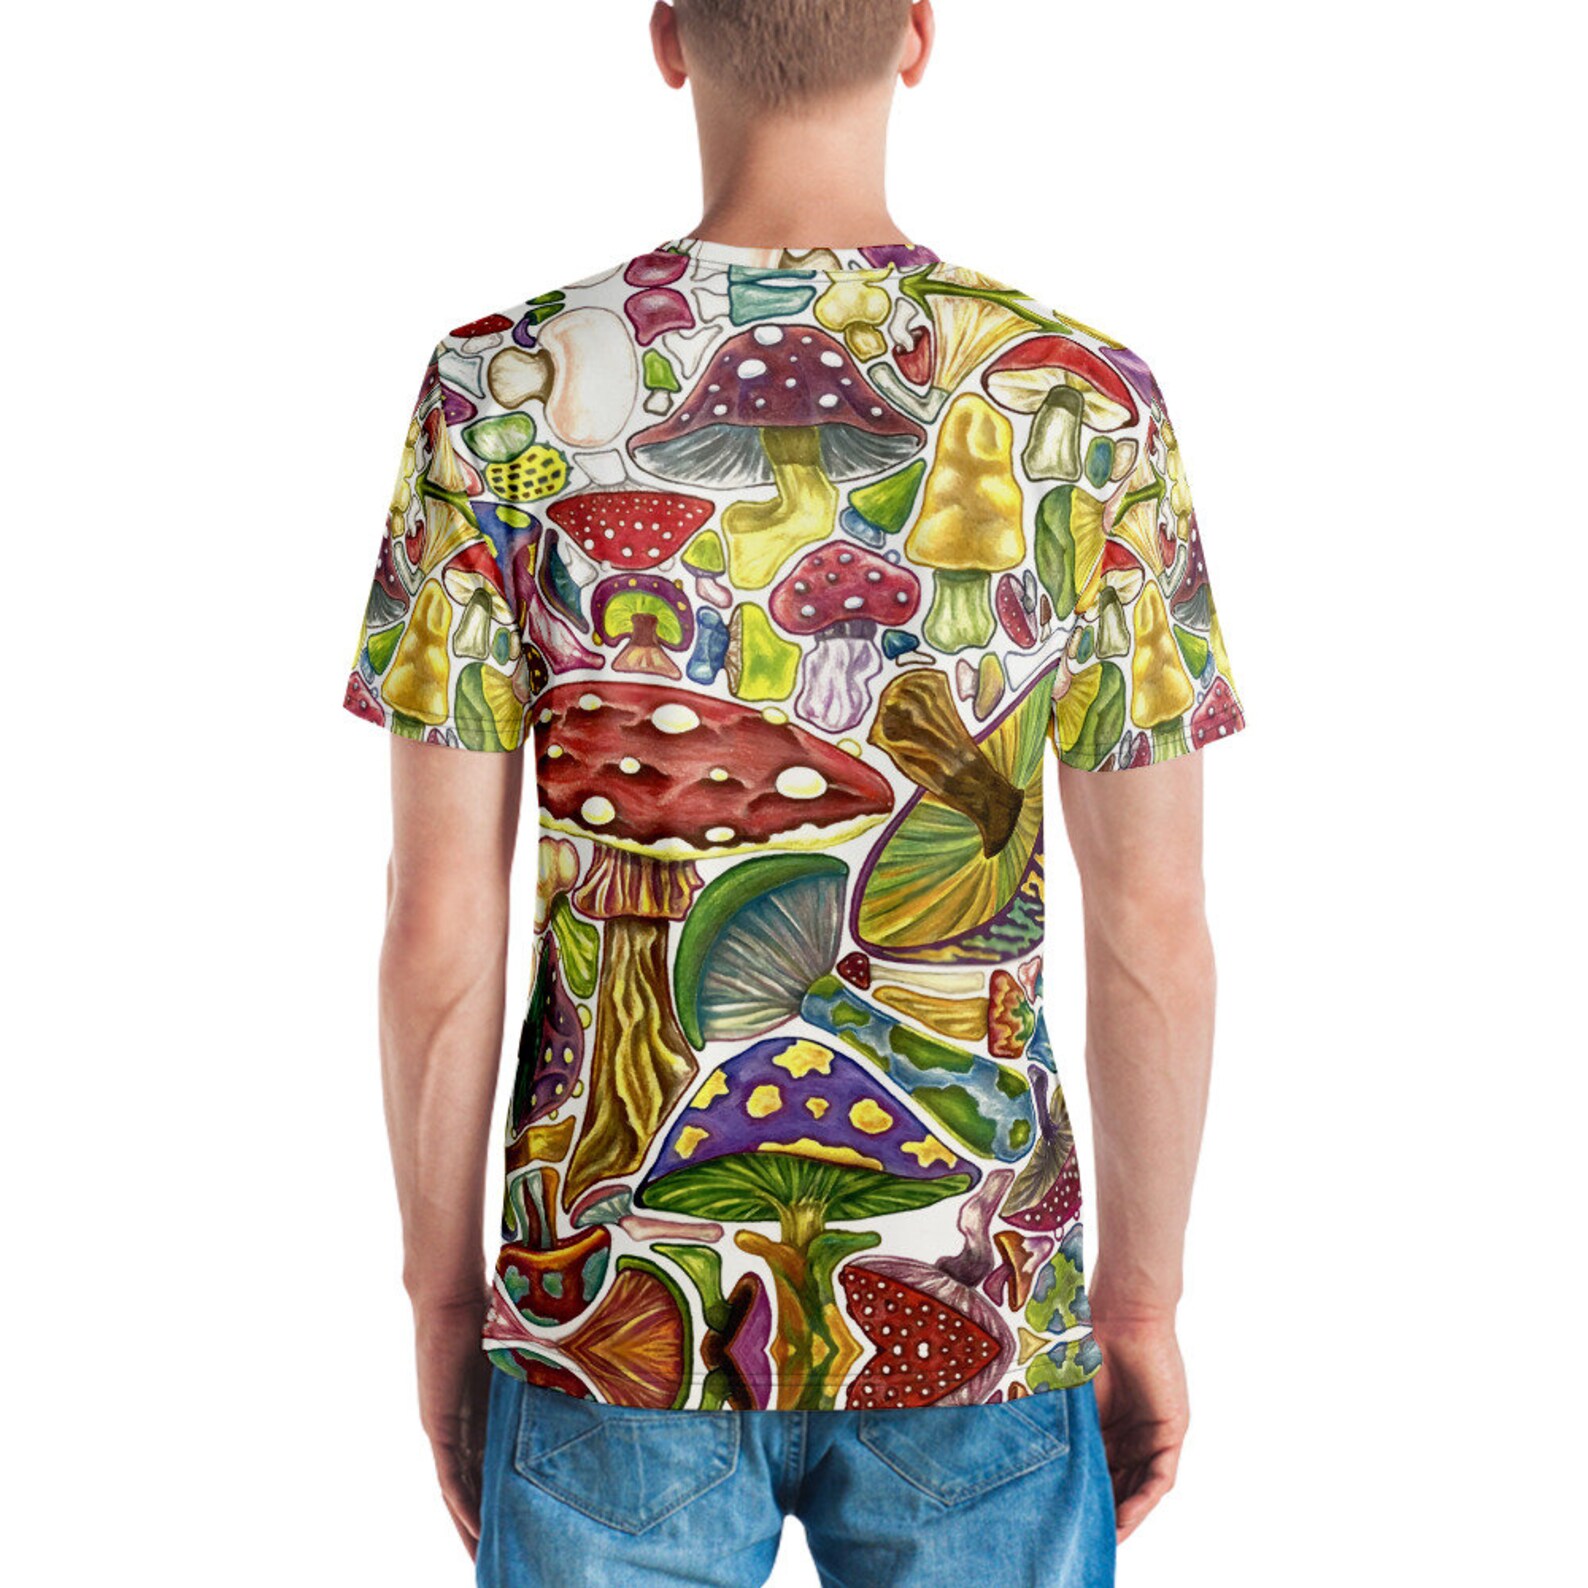 Fun Guy T-shirt, Fungus T-shirt, Mushroom Tee, Mushrooms, Phish, Trippy ...